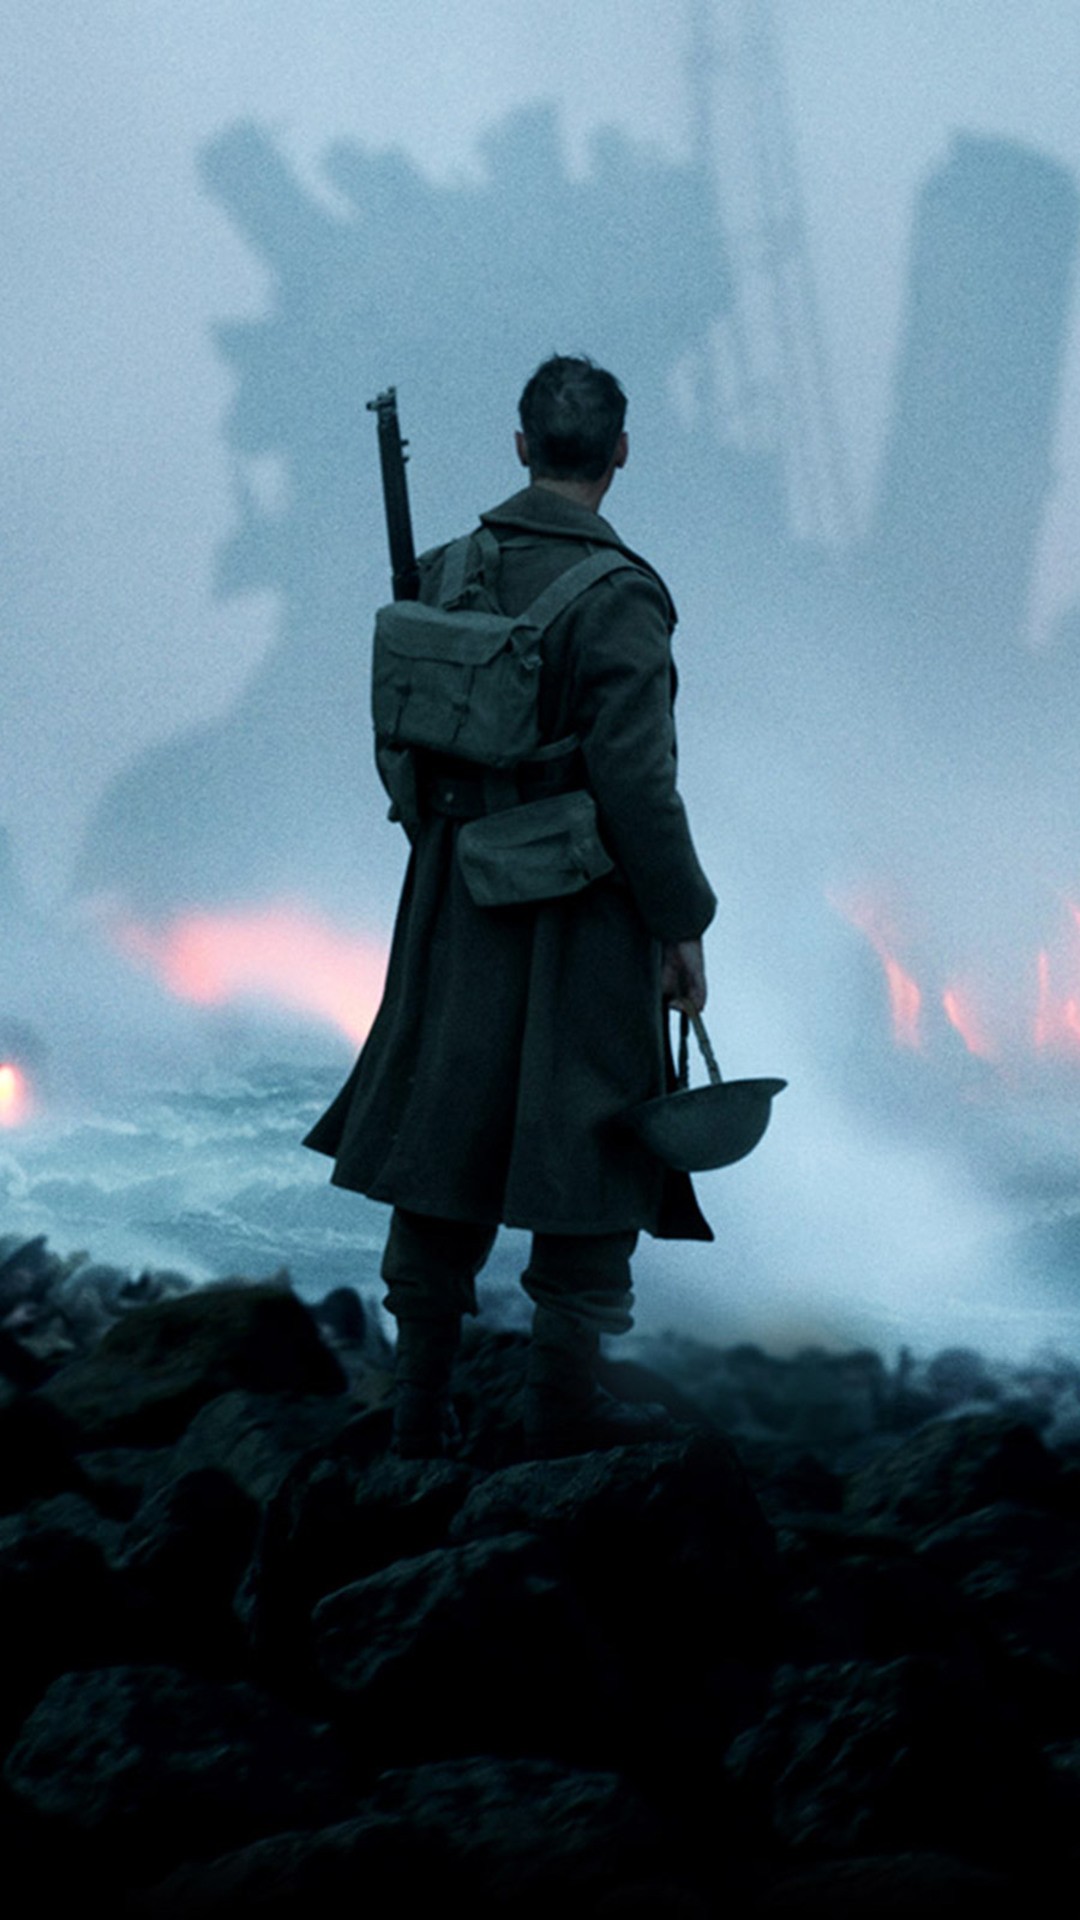 Dunkirk 2017 Movie Wallpaper 1080x1920 HD Wallpapers Download Free Images Wallpaper [wallpaper981.blogspot.com]